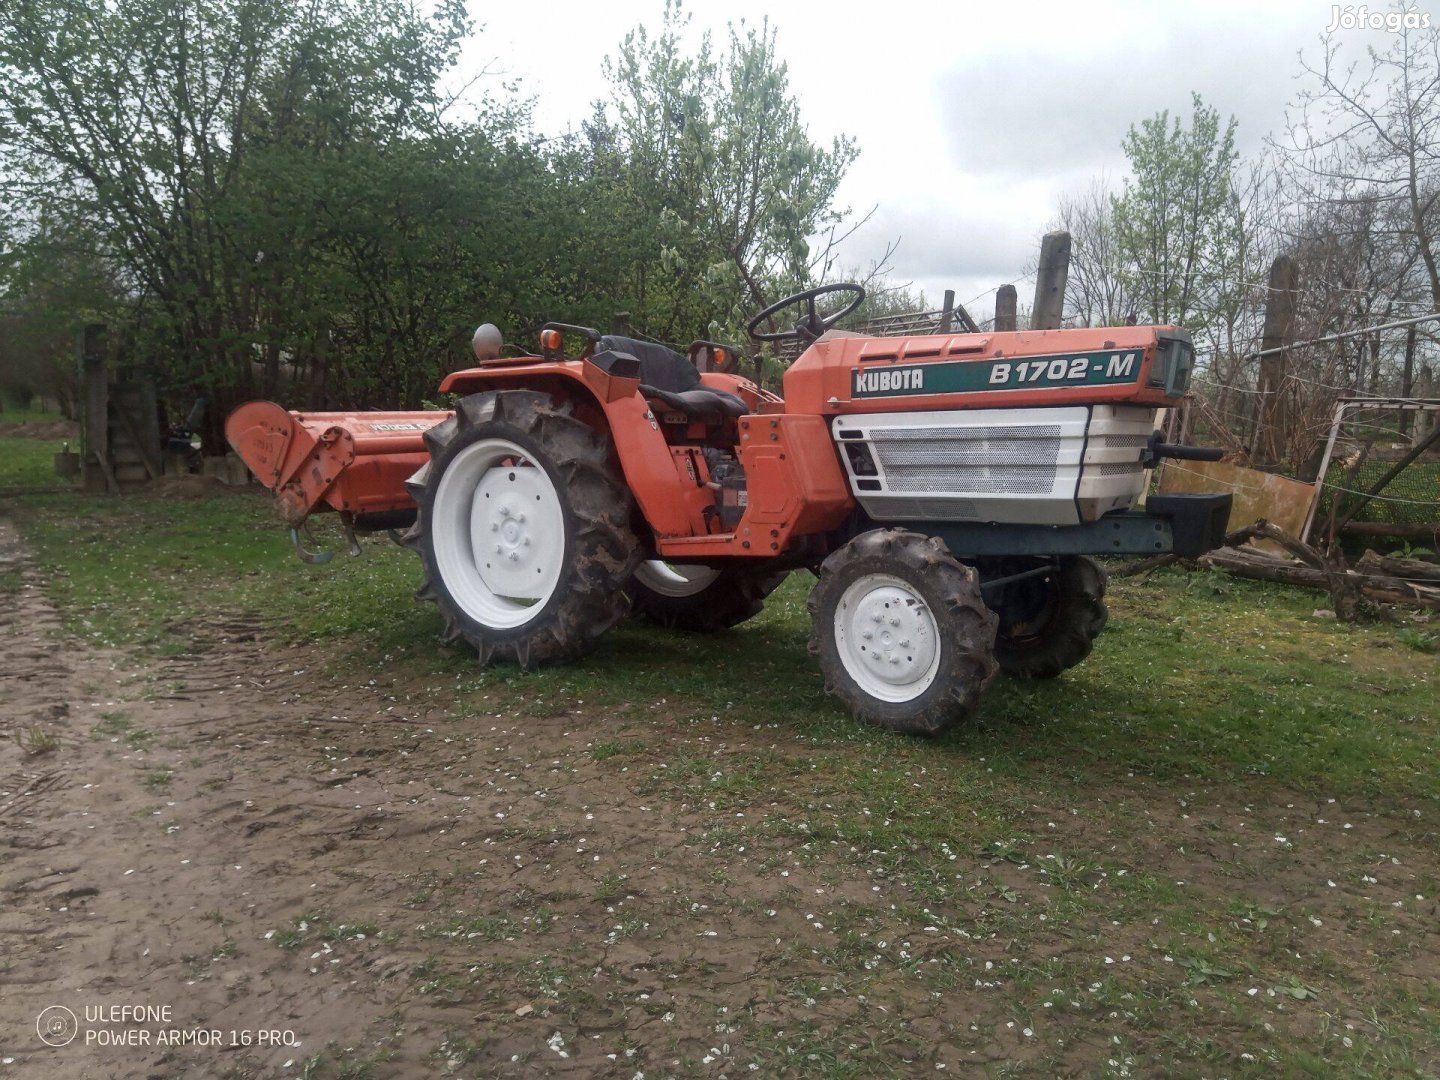 Traktor kistraktor Kubota B1702-M 17Le 4x4 talajmaróval eladó